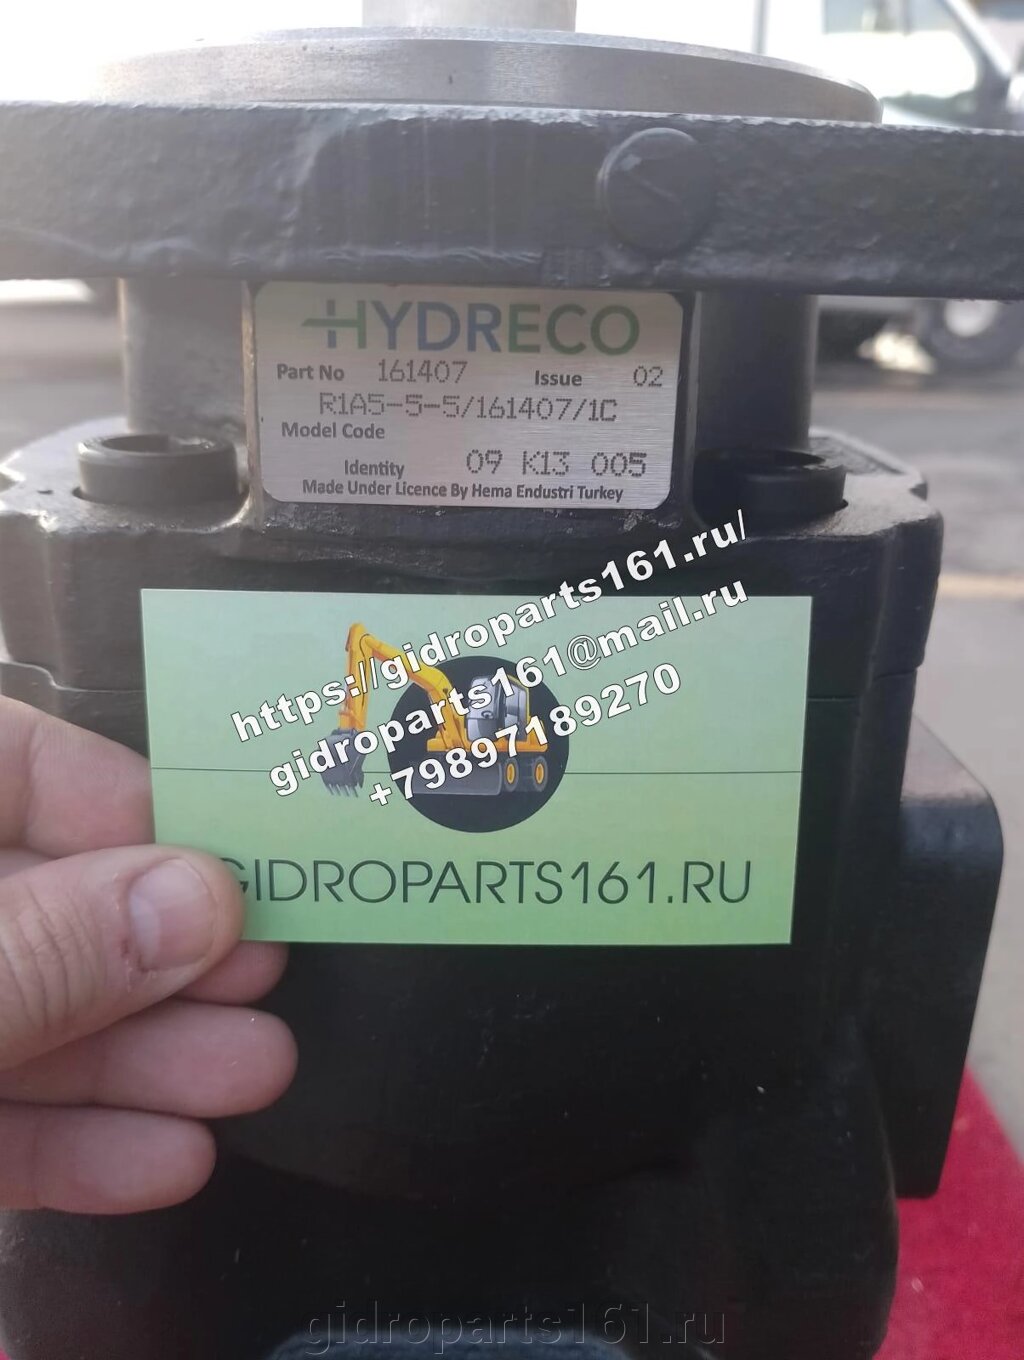 Гидравлический насос HYDRECO 161407 (R1A5-5/161407/1C) от компании Гидравлические запчасти 161 - фото 1